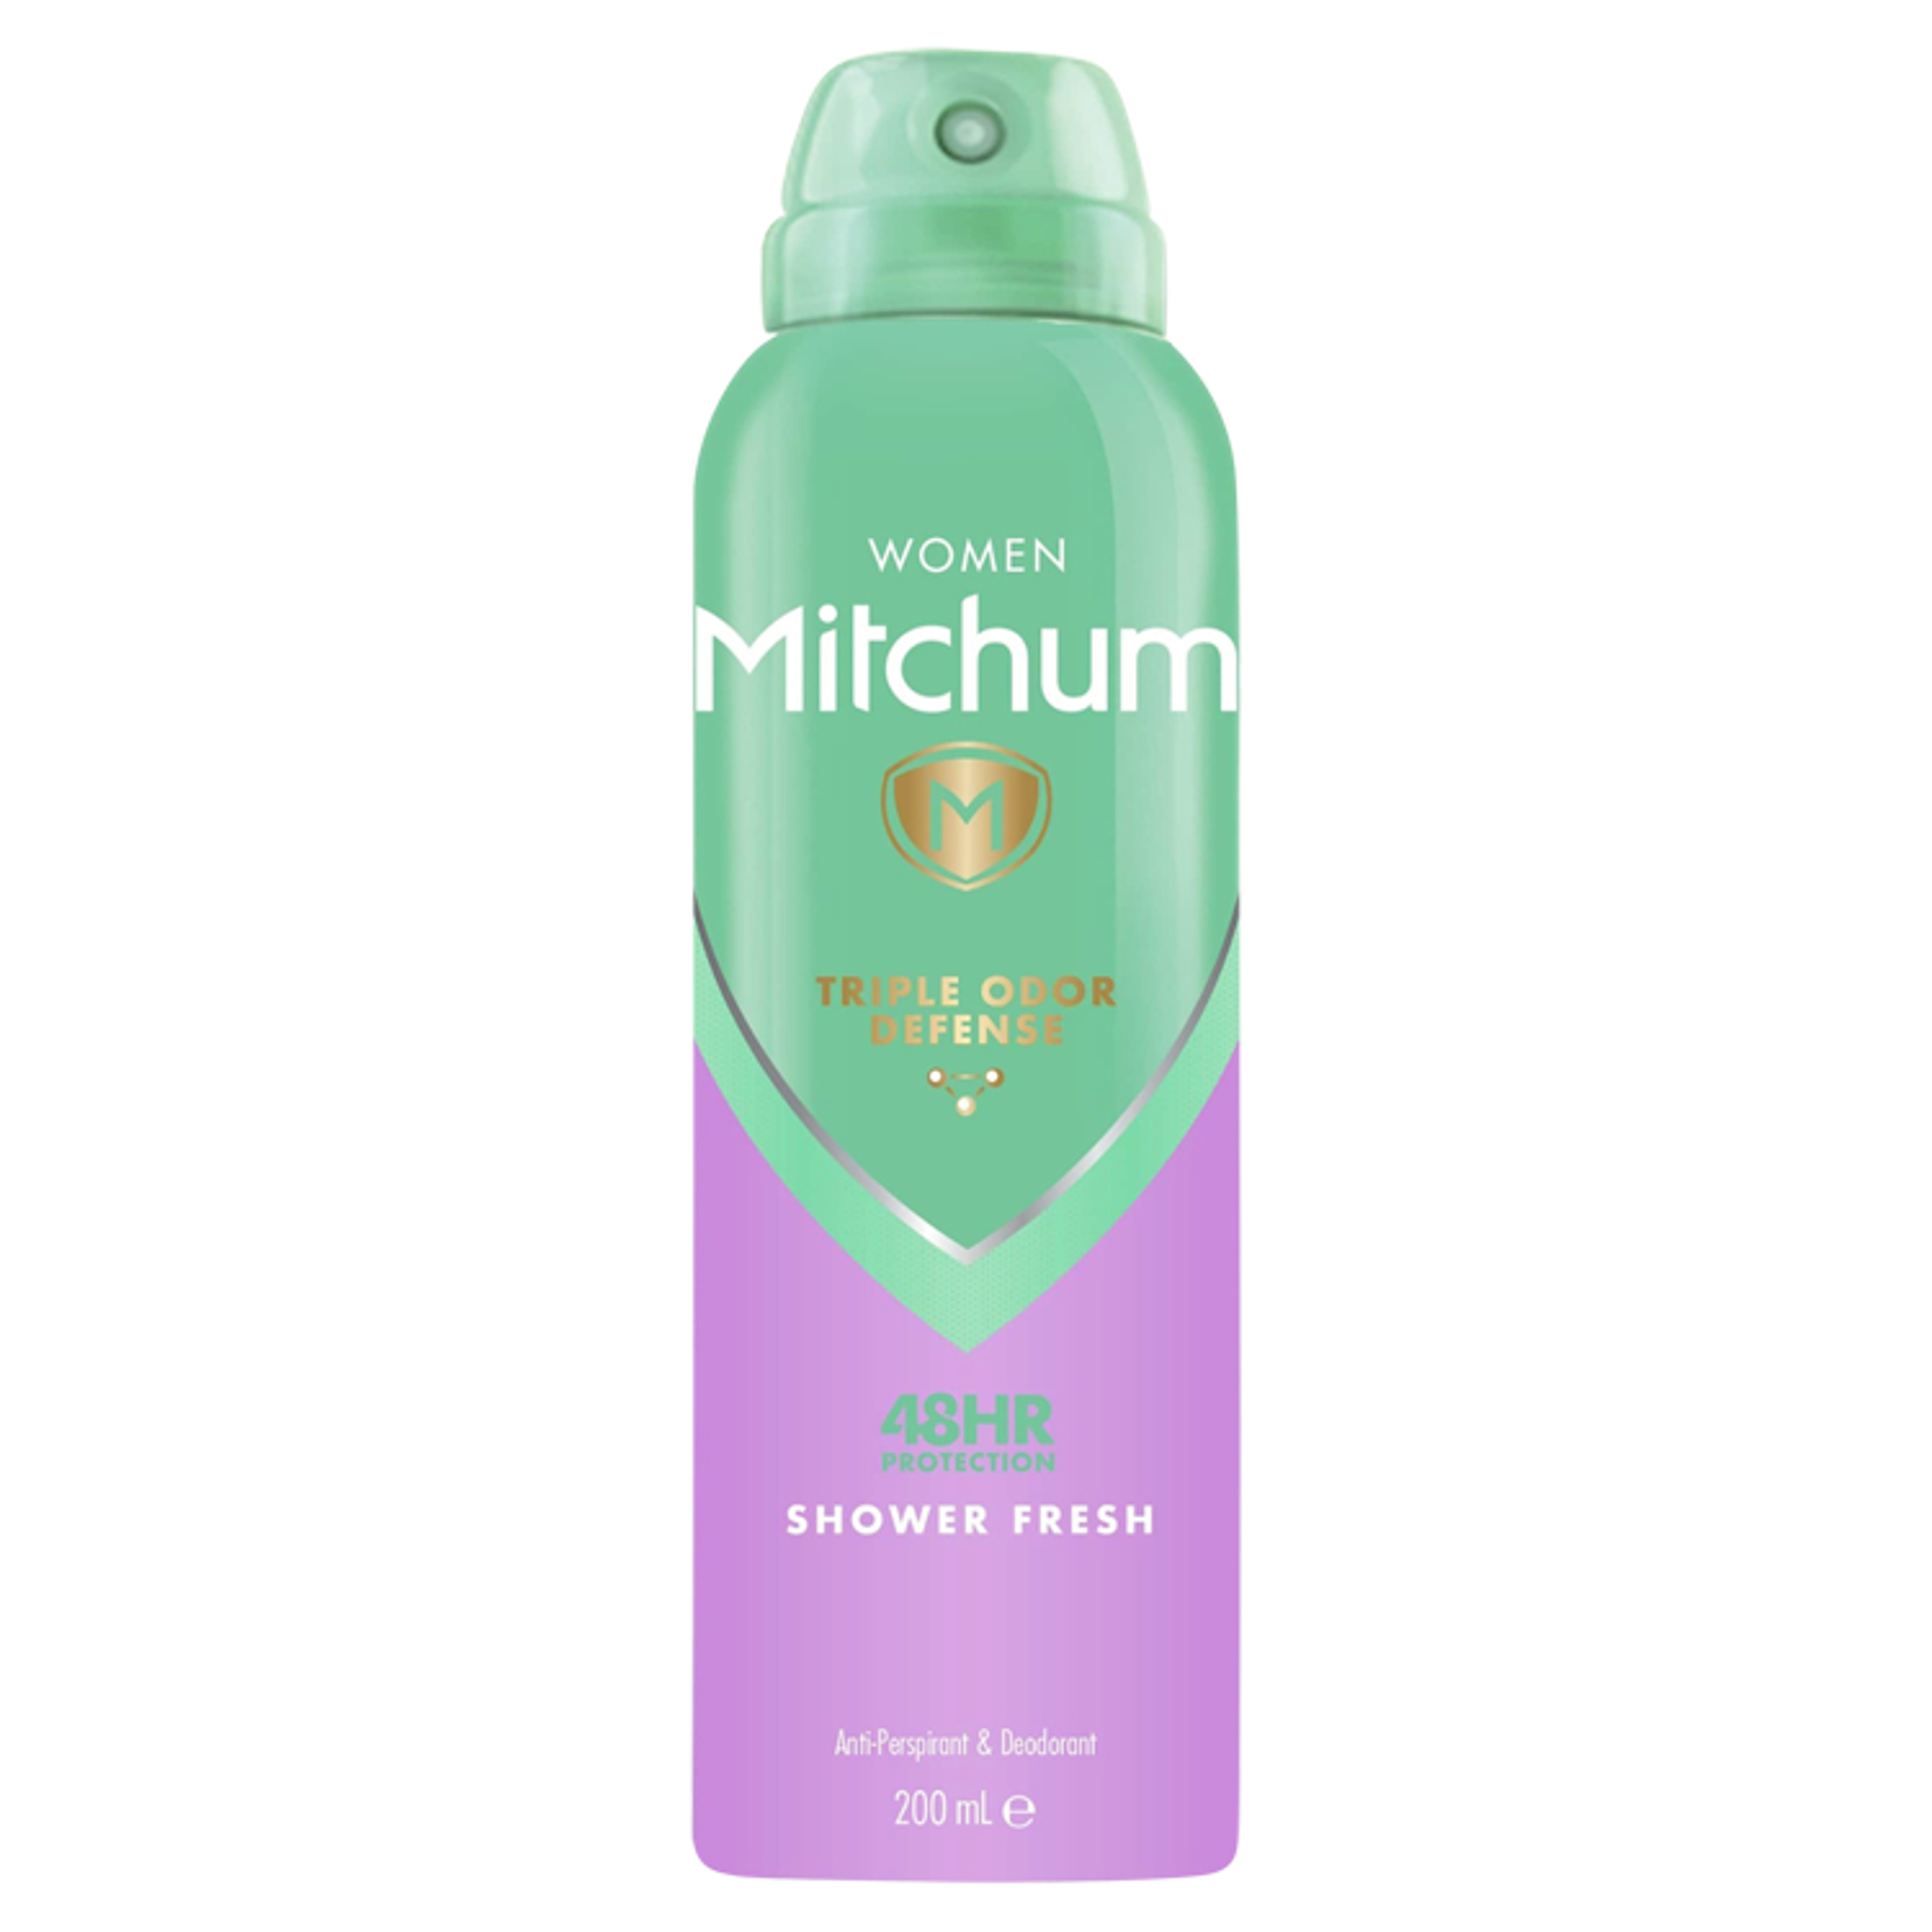 Mitchum Advanced Women's 48hr Protection Shower Fresh Anti-Perspirant 200ml